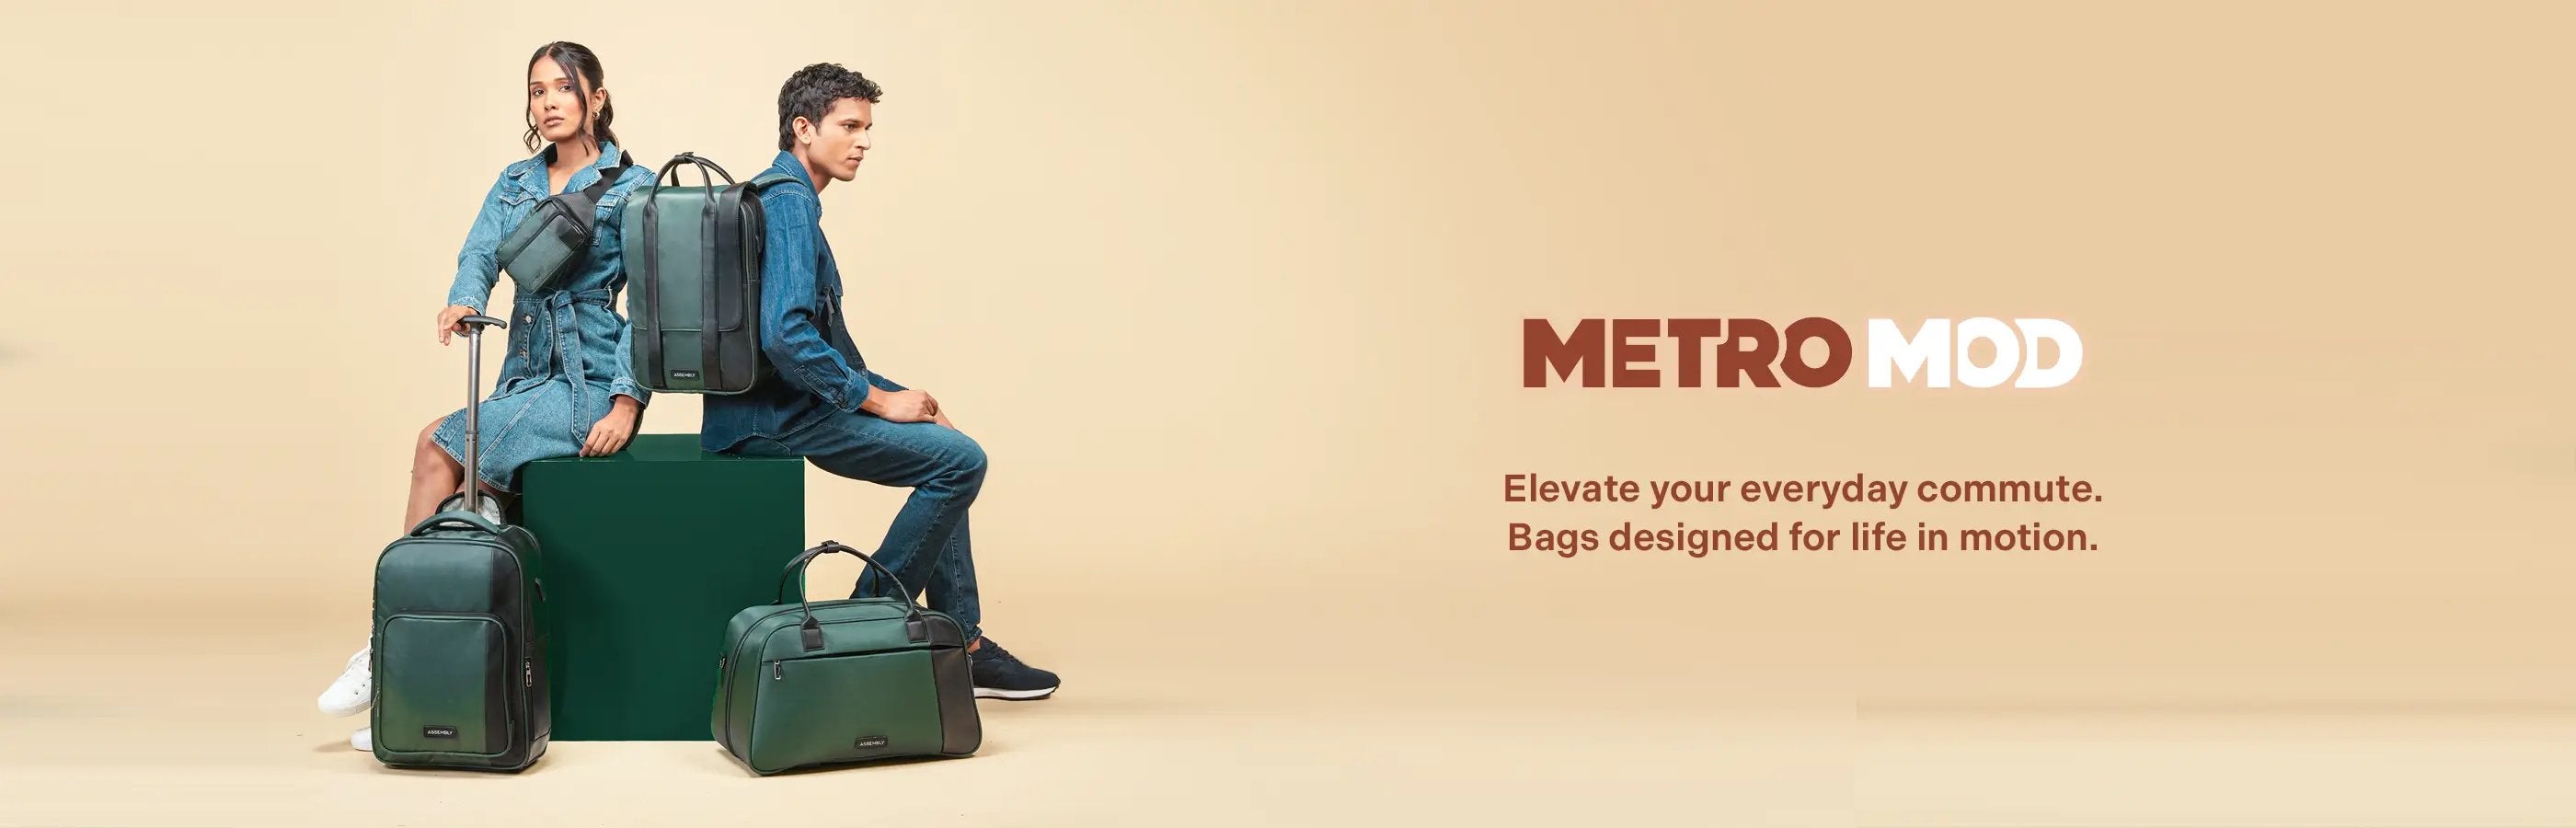 Metro Mod Collection